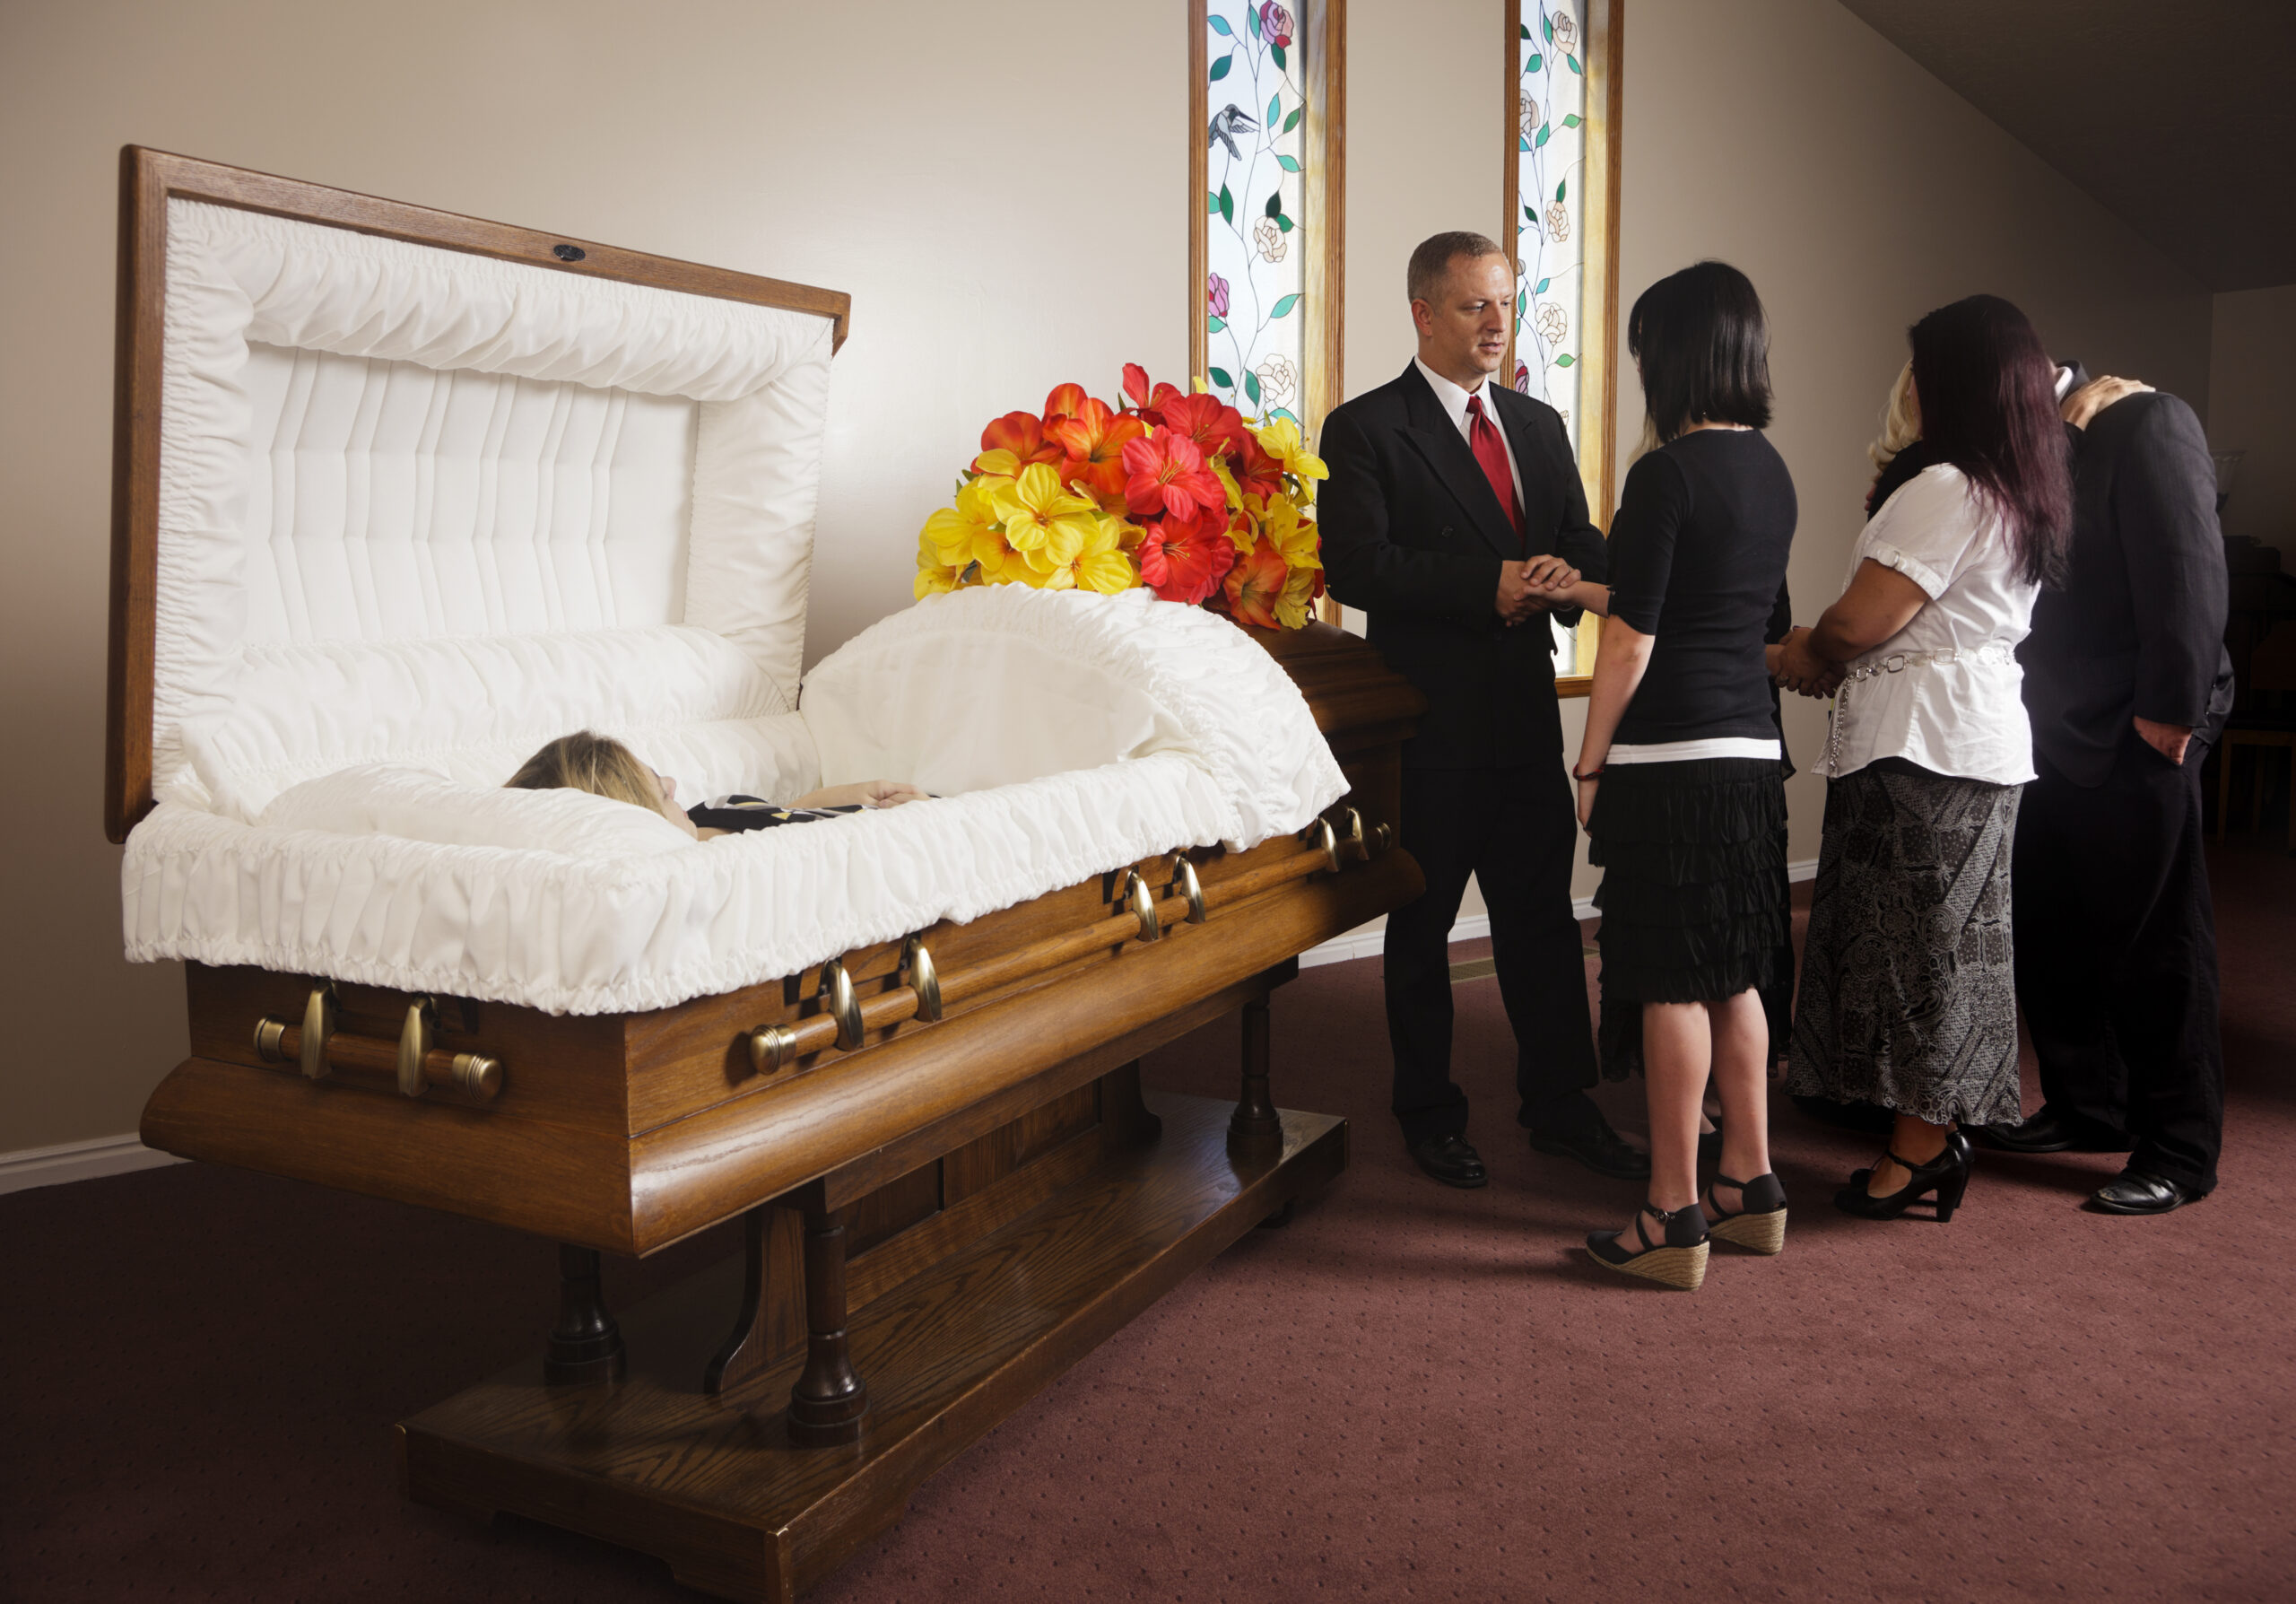 Funeral - Casa funeraria